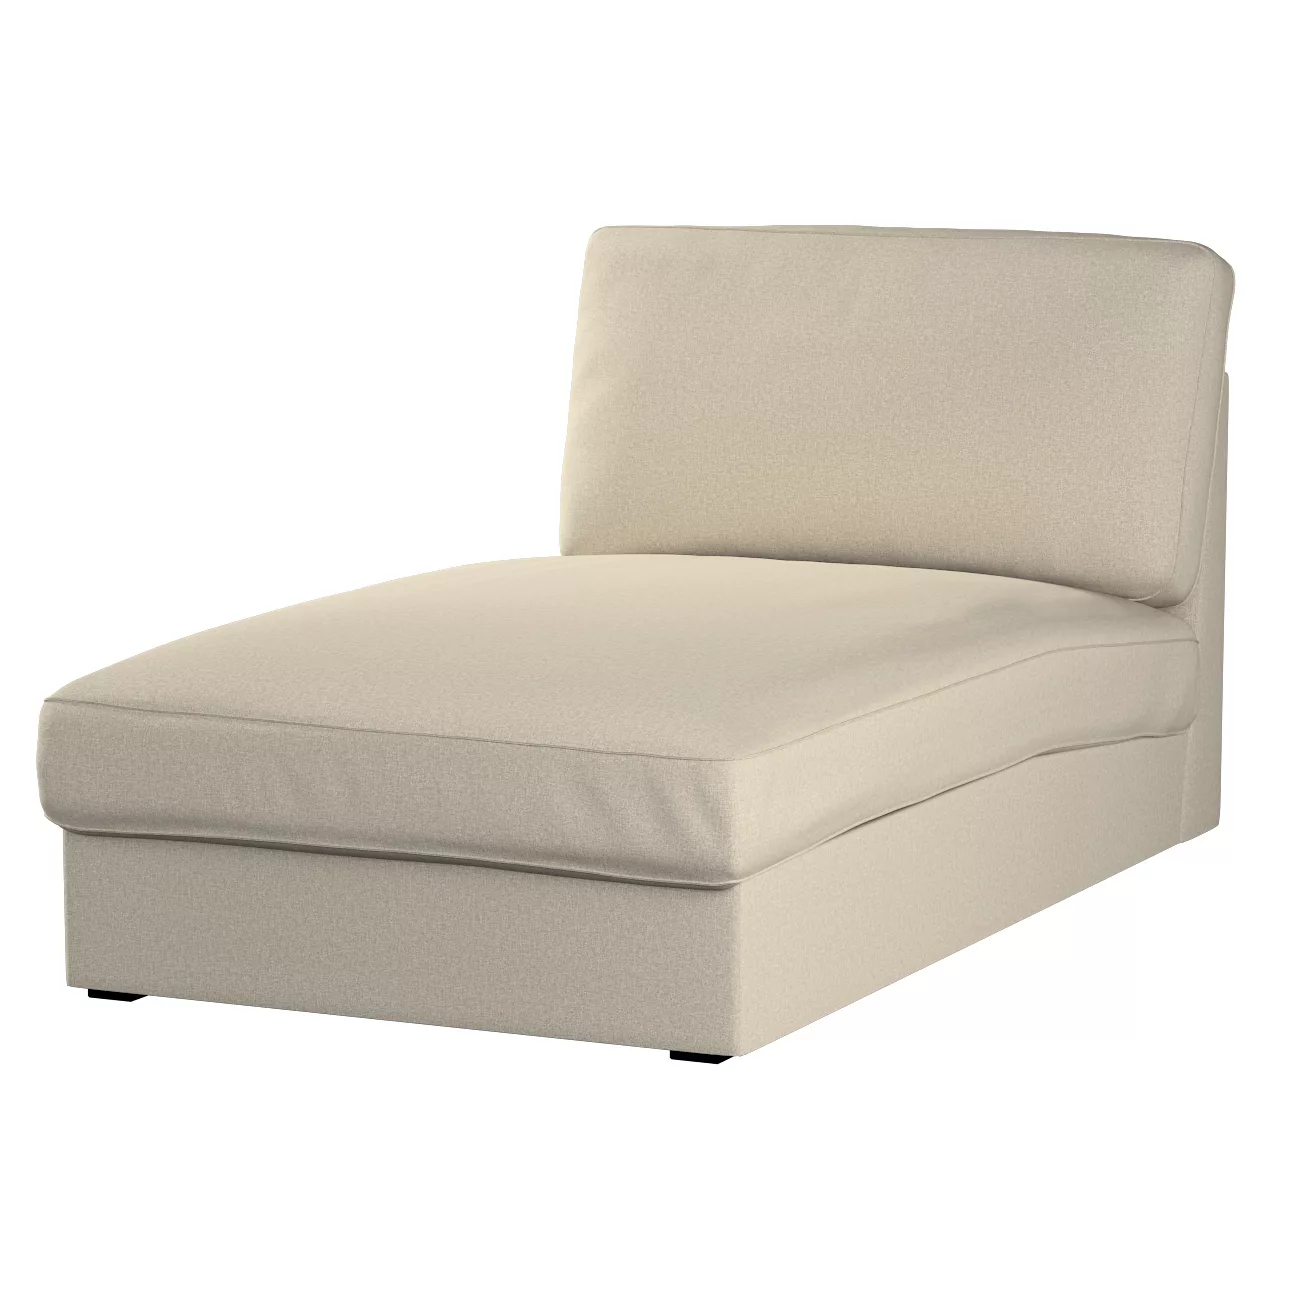 Bezug für Kivik Recamiere Sofa, grau-beige, Bezug für Kivik Recamiere, Amst günstig online kaufen